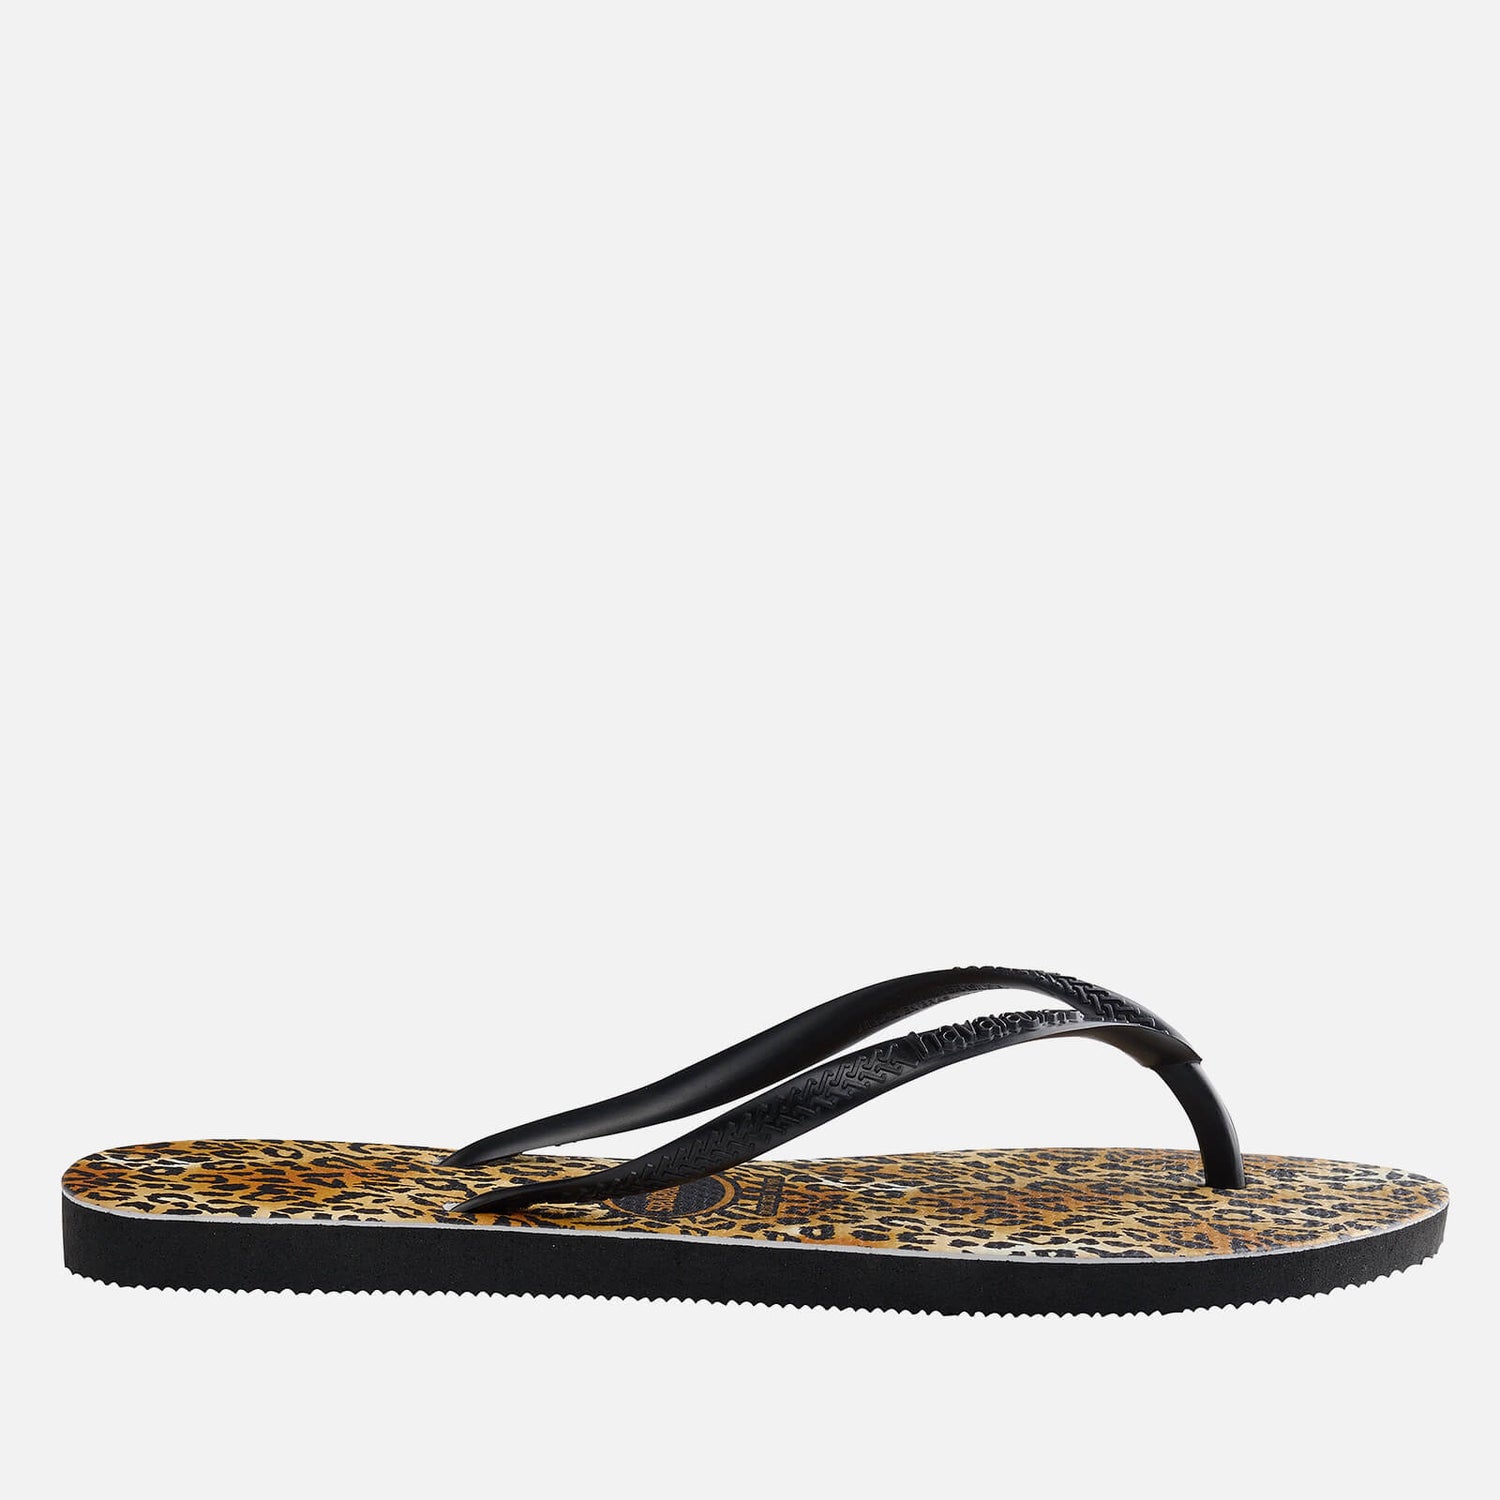 Havaianas Women's Slim Leopard Flip Flops - Black